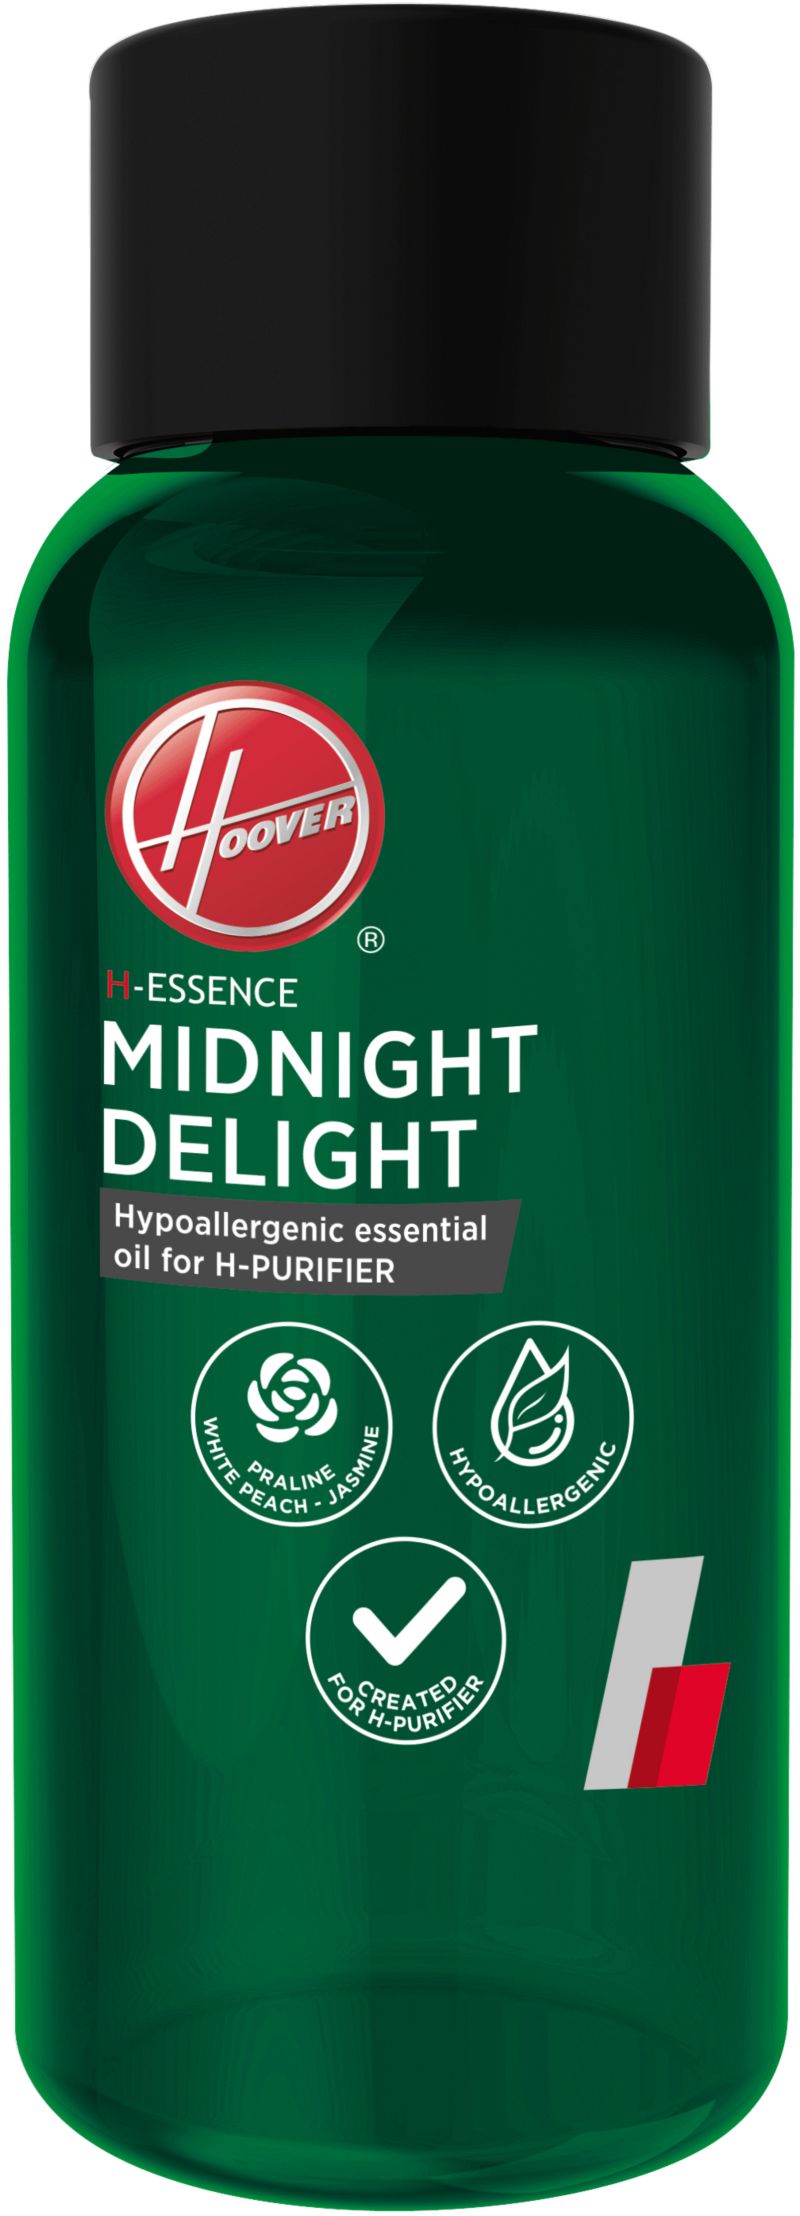 Hoover H-ESSENCE MIDNIGHT DELIGHT - APF3